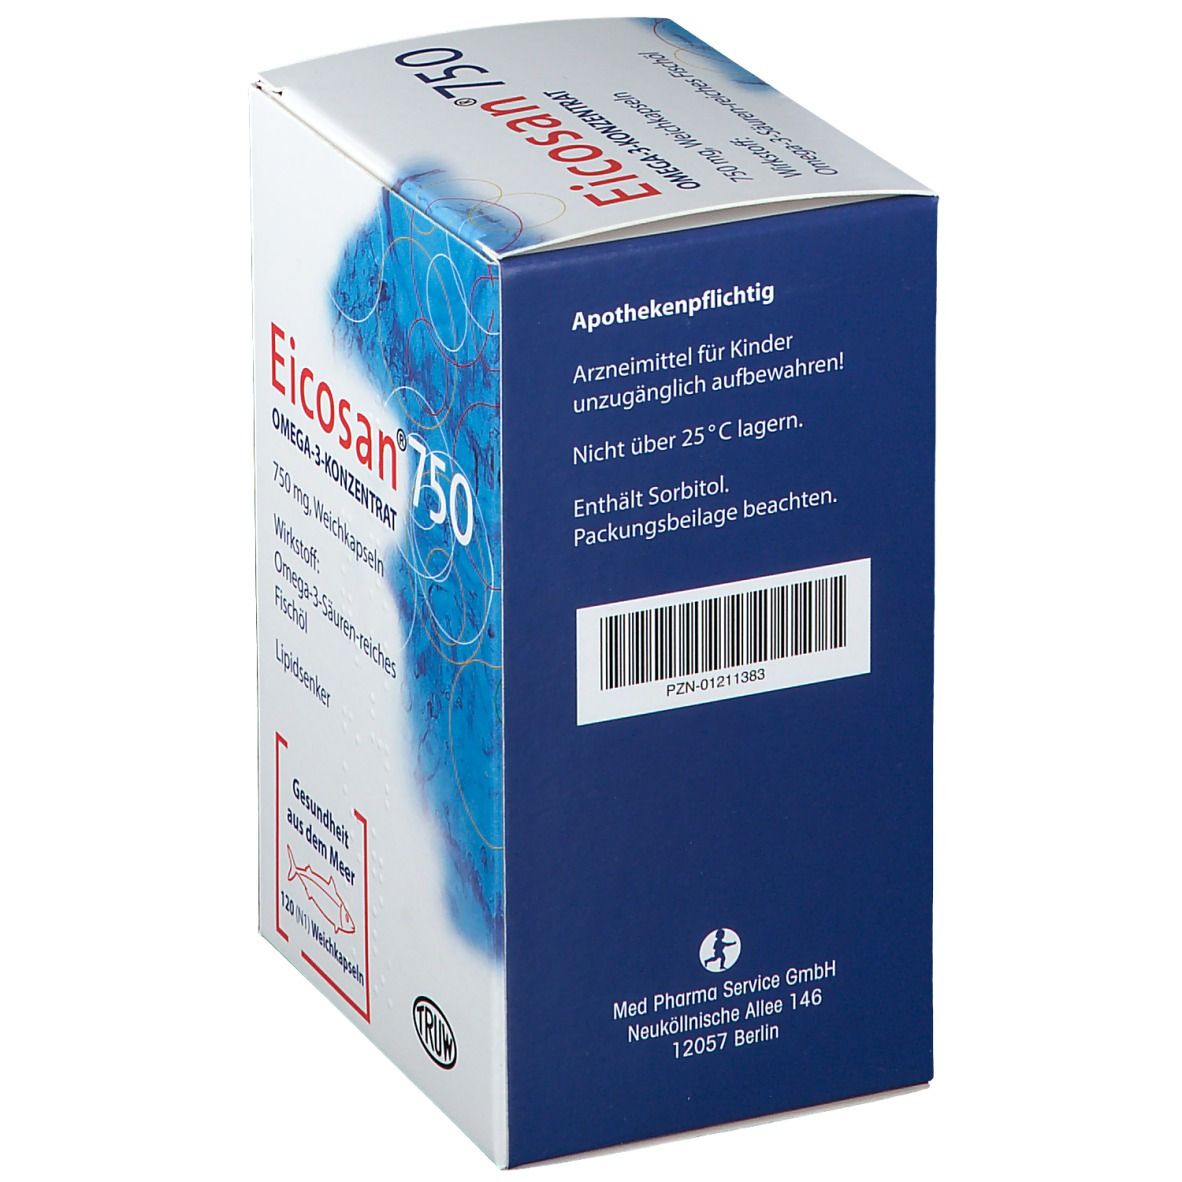 Eicosan® 750 Omega-3-Konzentrat